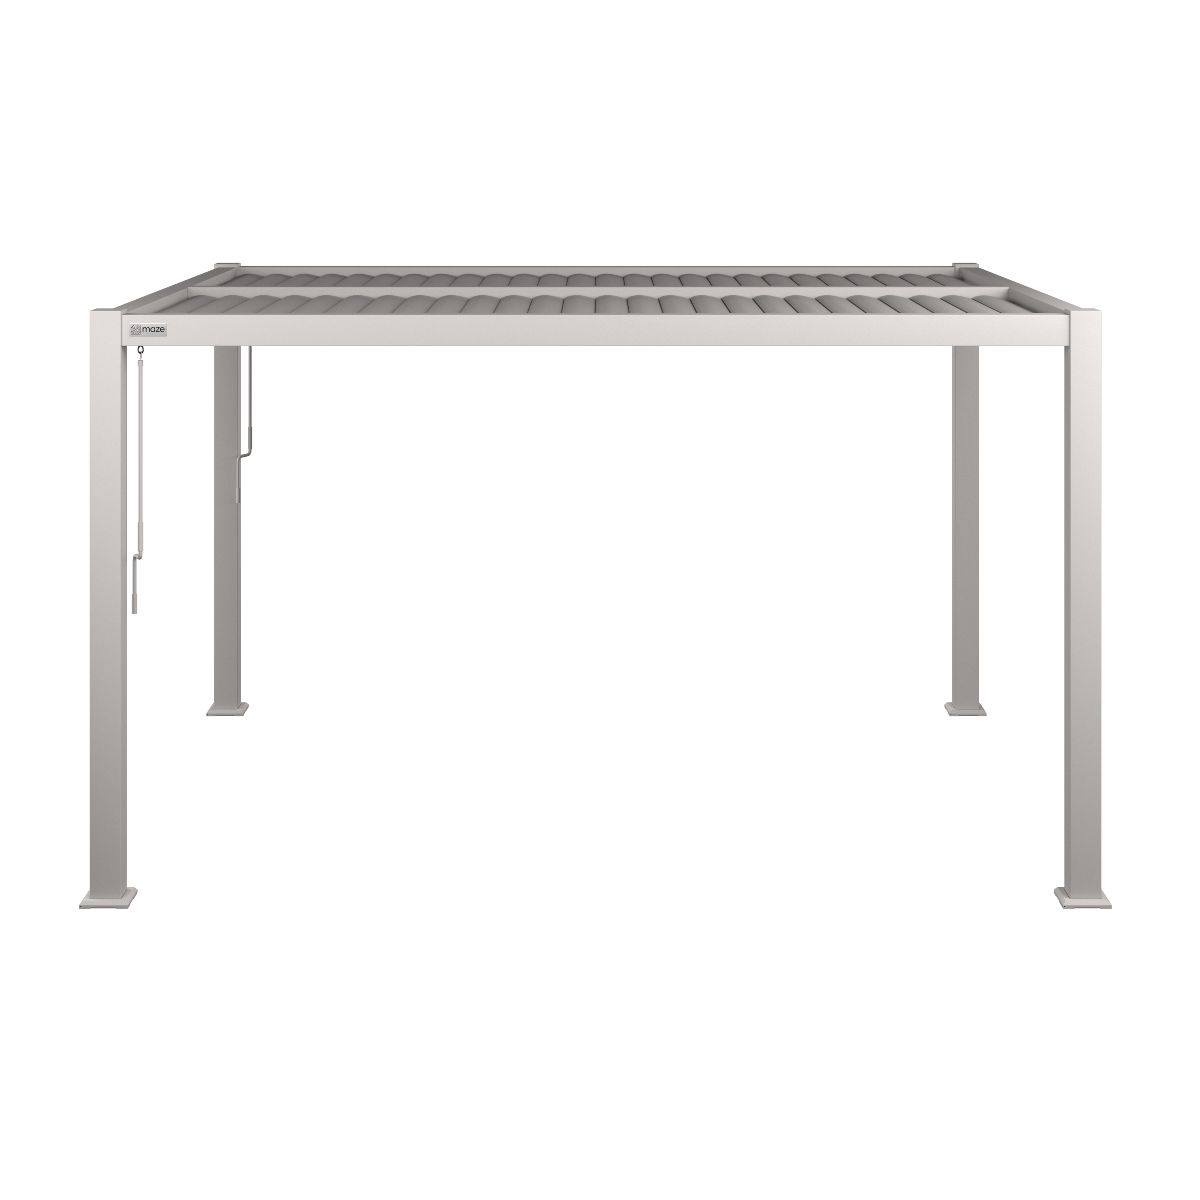 Maze Como Pergola Aluminium Rectangular 30x40 - Frame Only White Top View-Better Bed Company